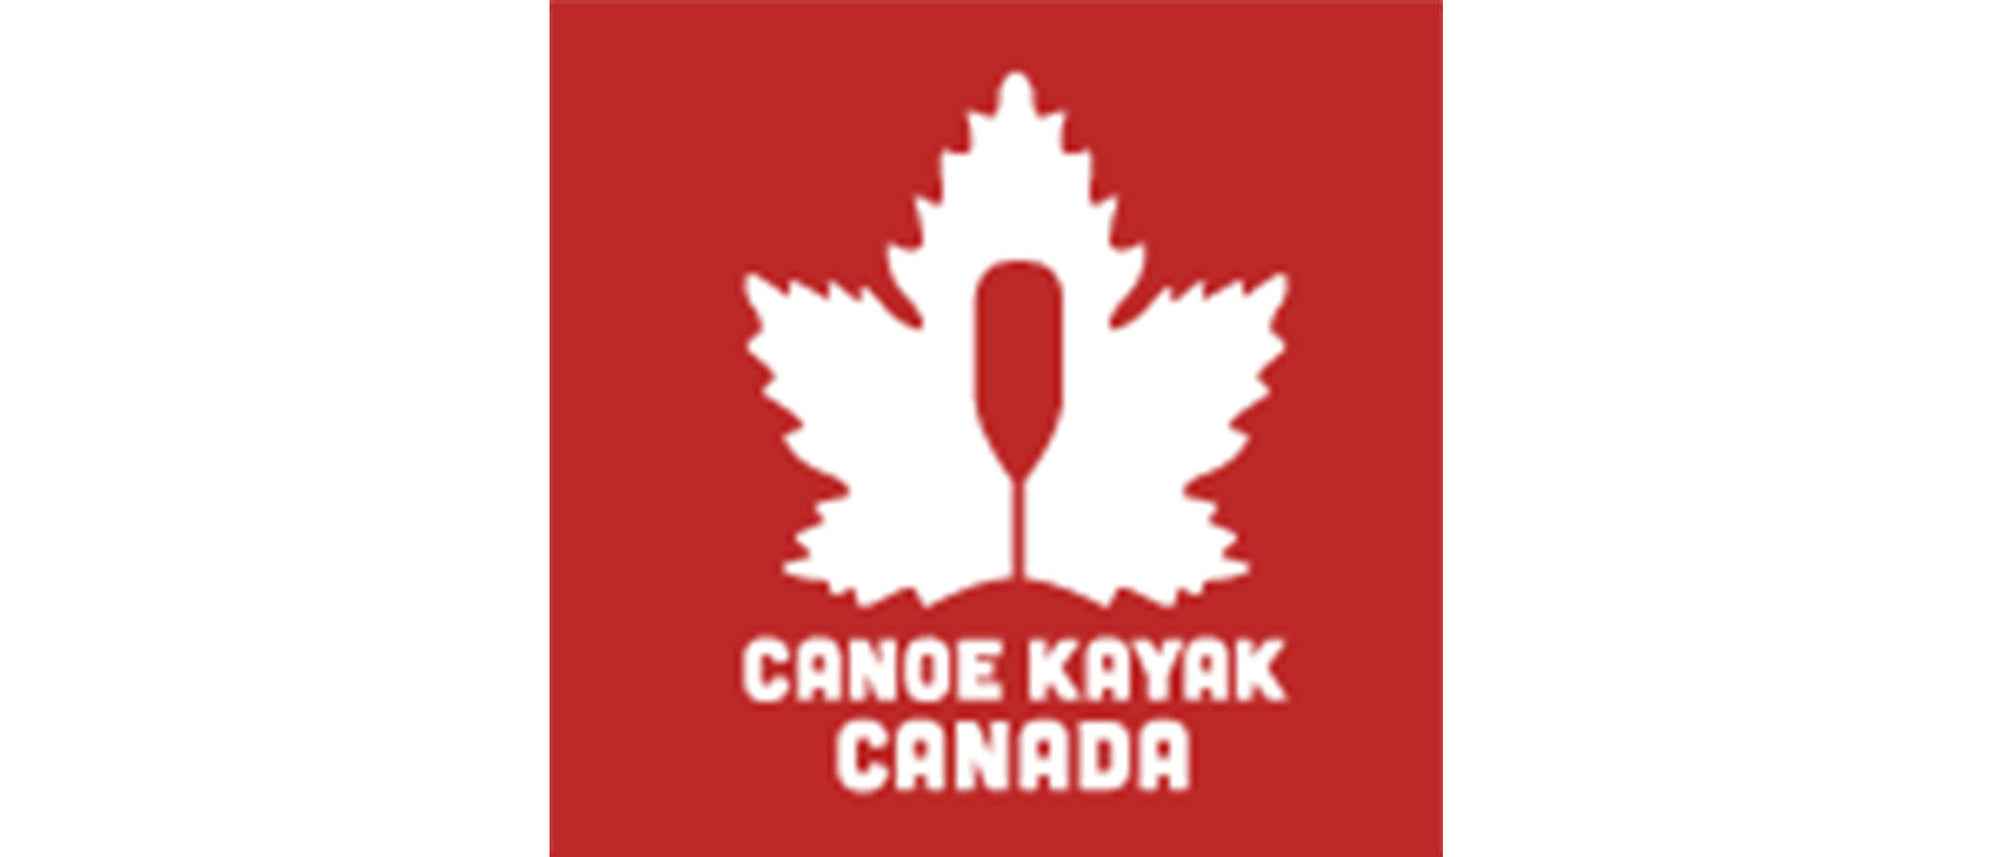 Canadian Canoe kayak Championships